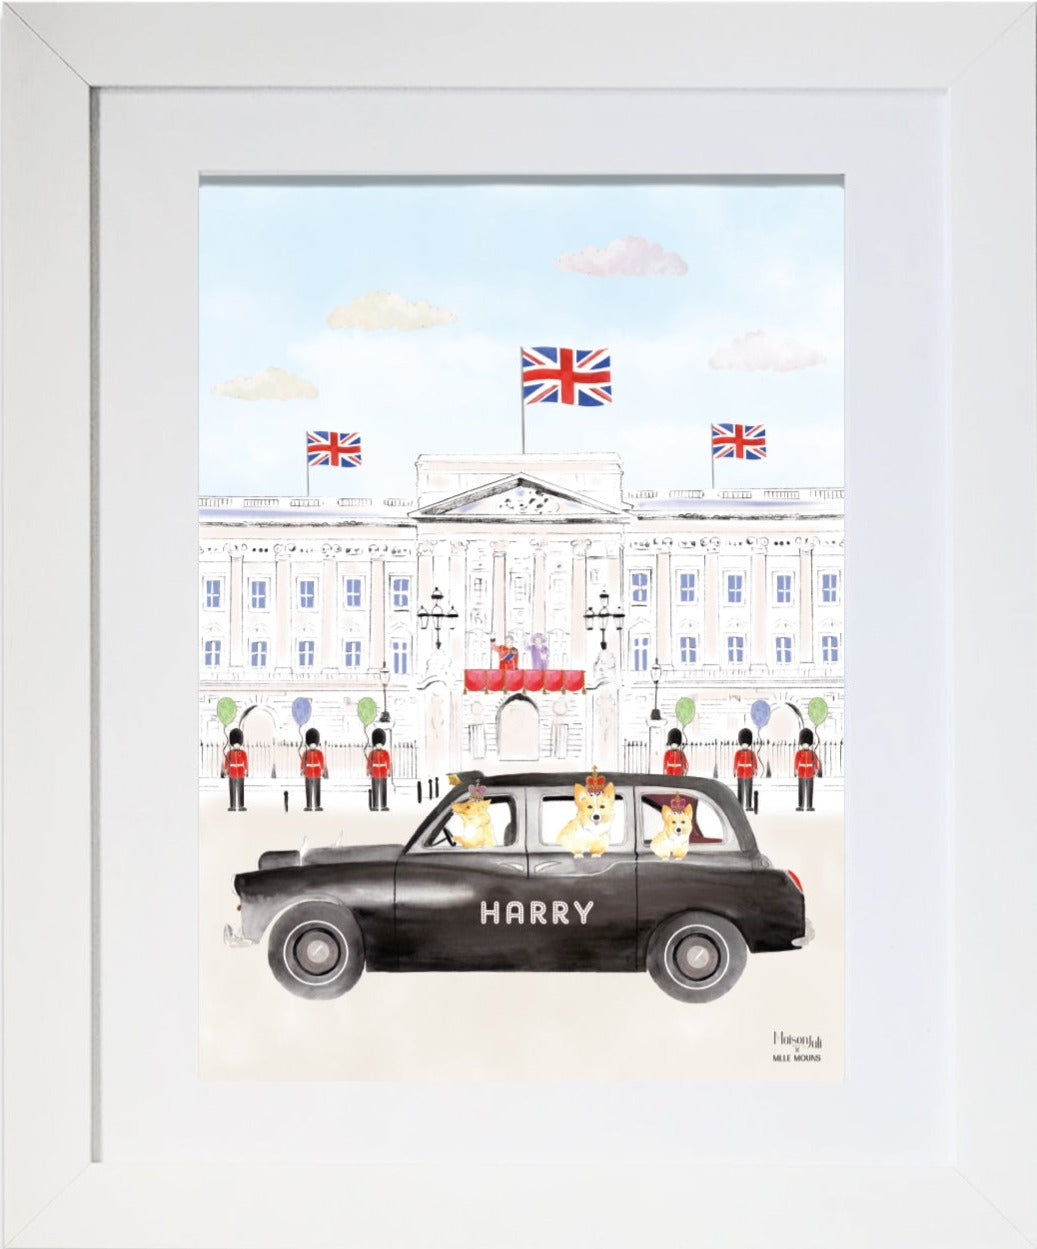 The Black Cab of Buckingham Palace for boys